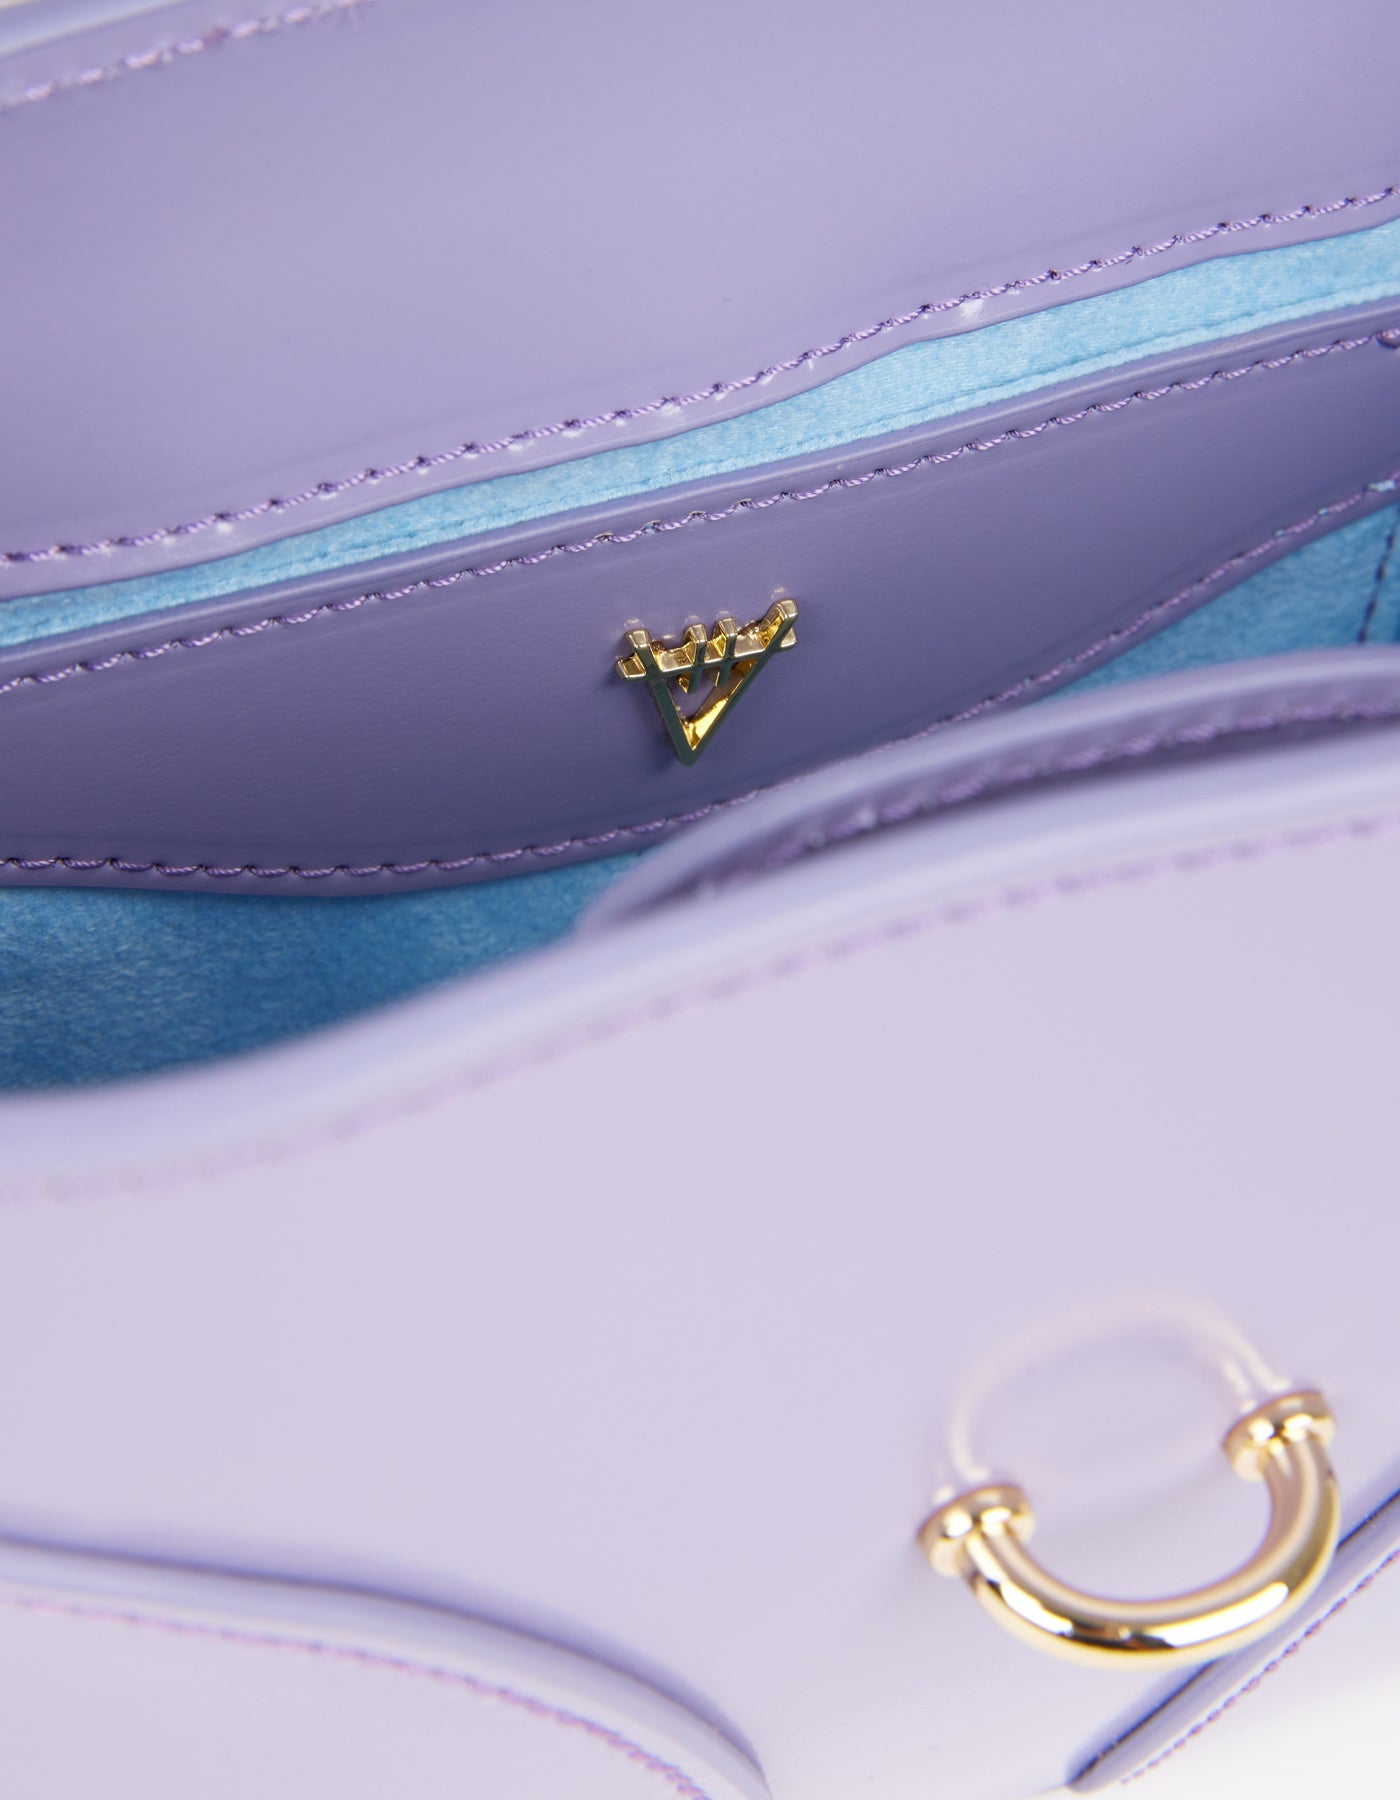 HiVa Atelier | Luna Shoulder Bag Lavender Silk | Beautiful and Versatile